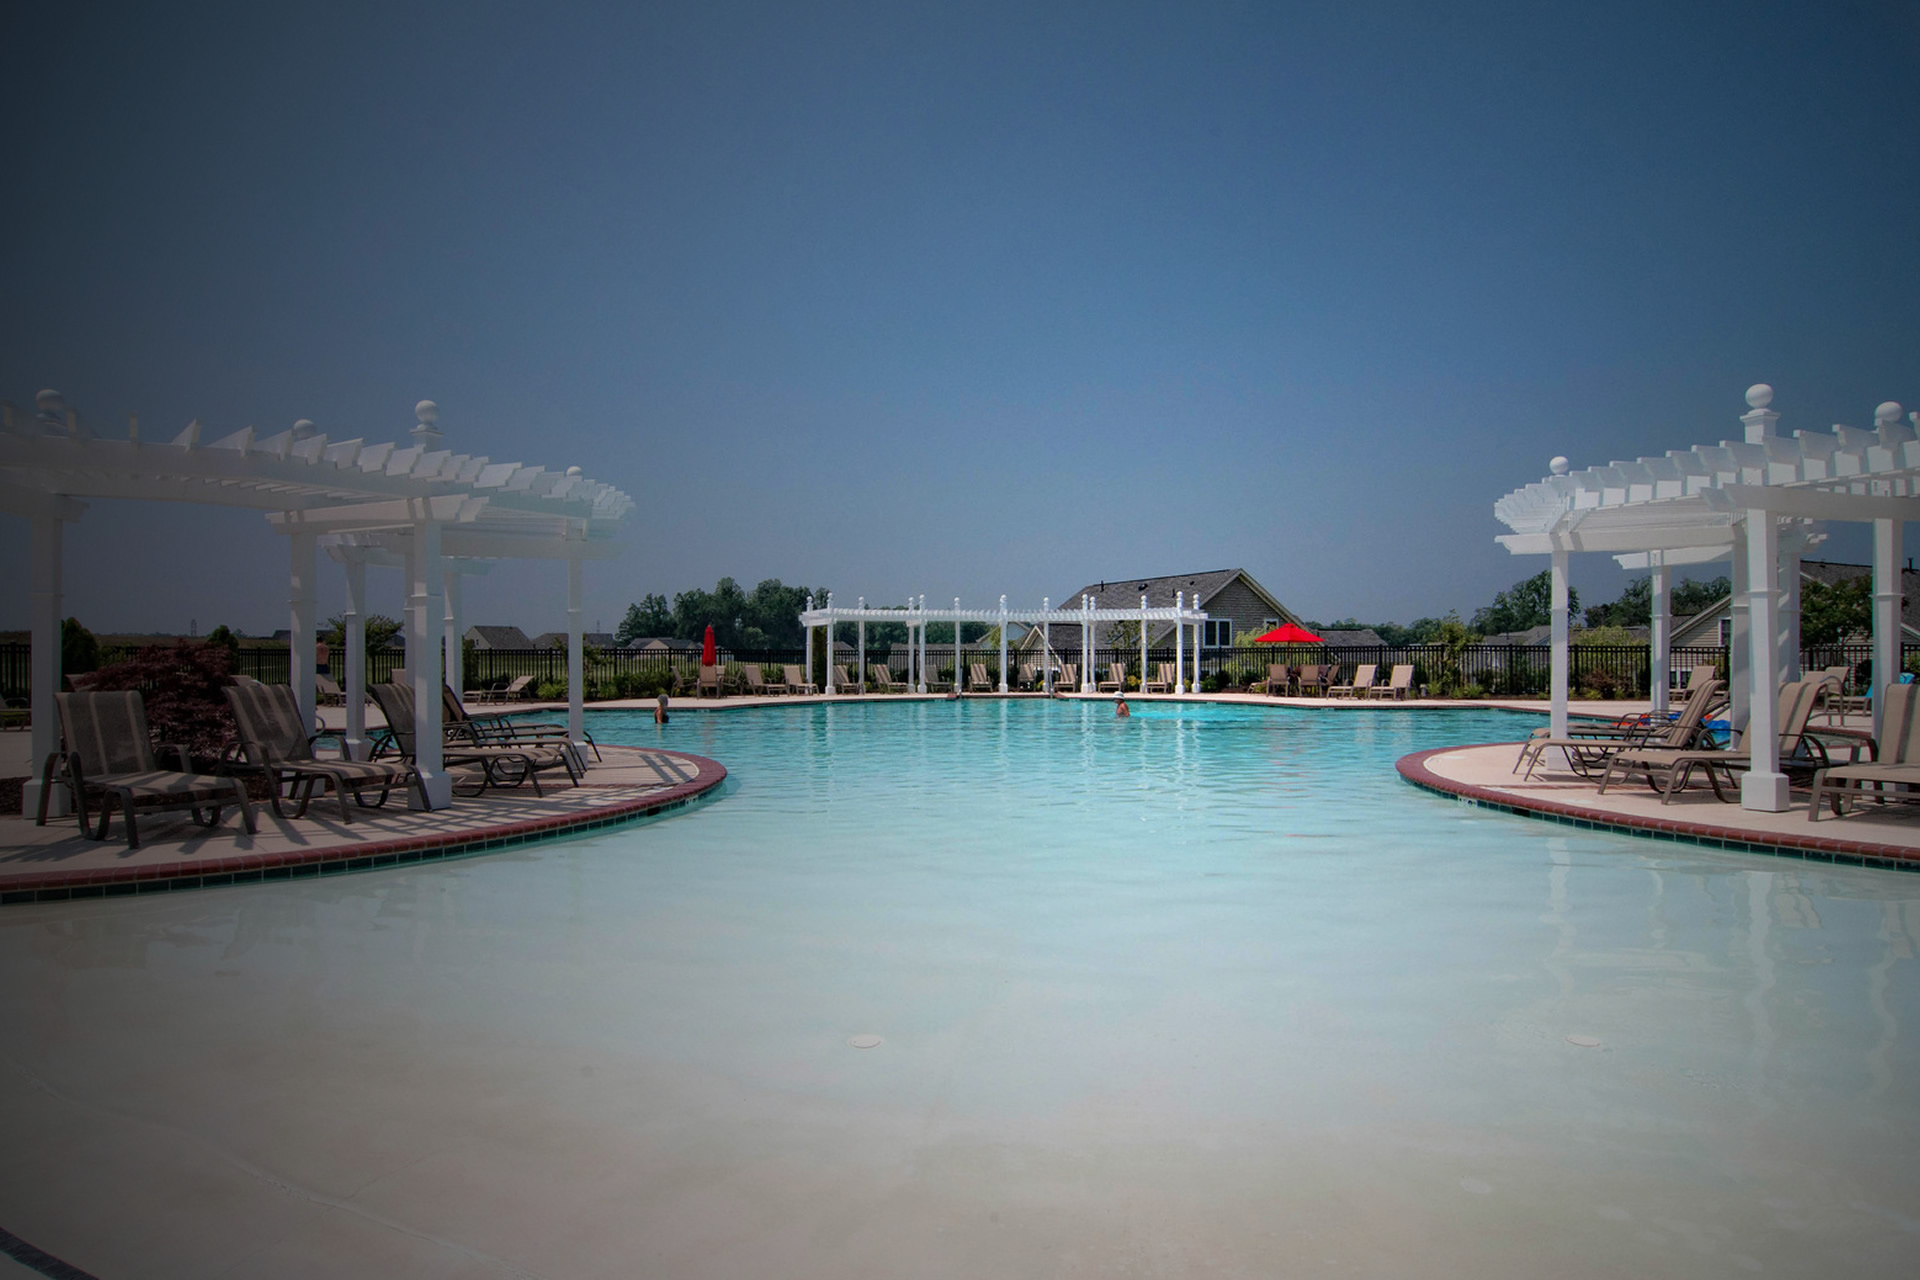 Best Neighborhoods with Pools near Williamsburg VA